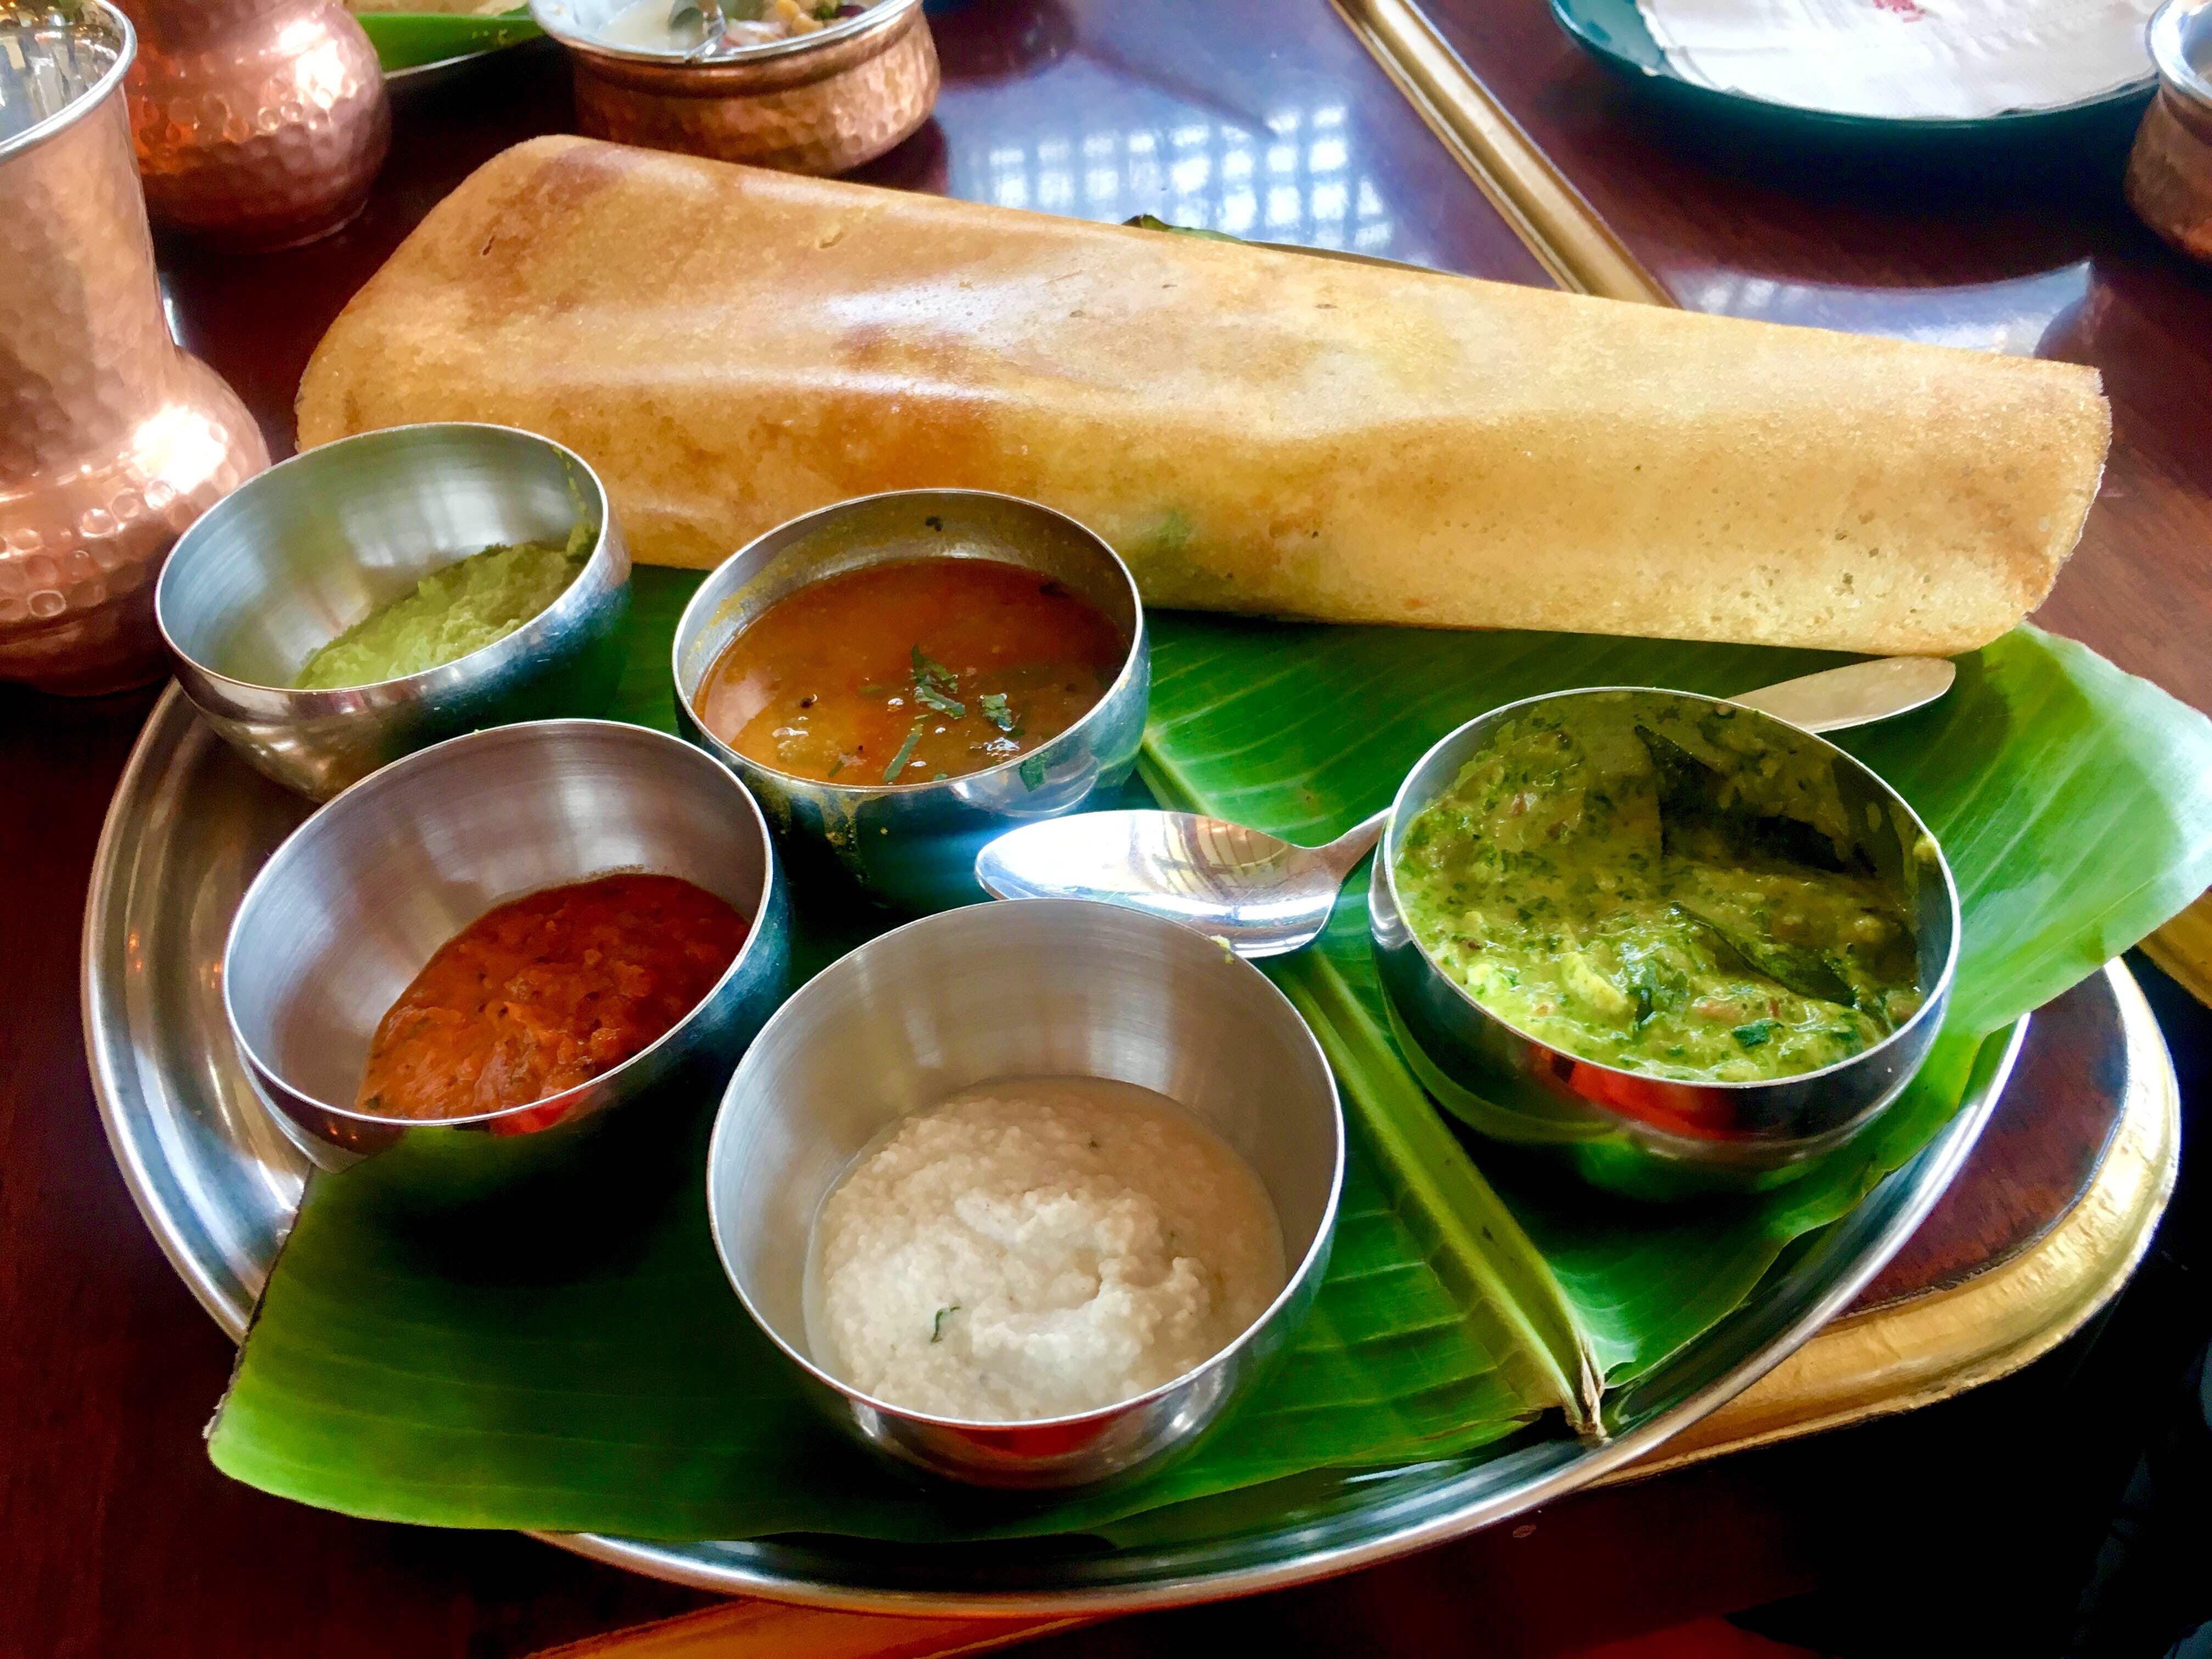 Dish,Food,Cuisine,Ingredient,Chutney,Indian cuisine,Dosa,Meal,Tamil food,South Indian cuisine